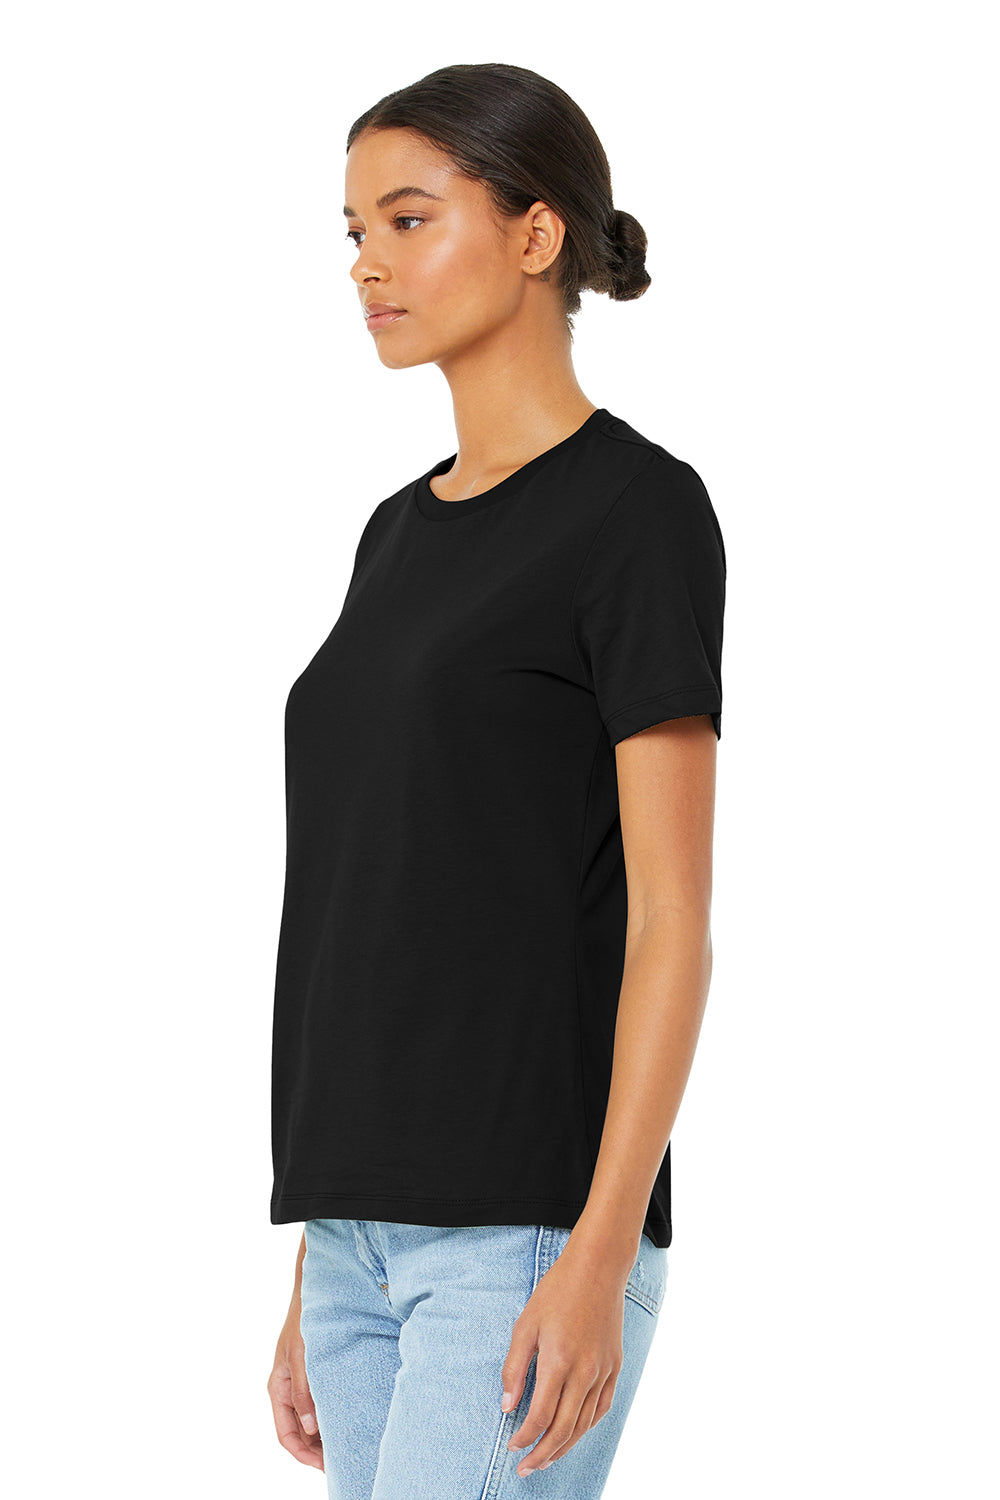 Bella + Canvas BC6400/B6400/6400 Womens Relaxed Jersey Short Sleeve Crewneck T-Shirt Black Model 3Q